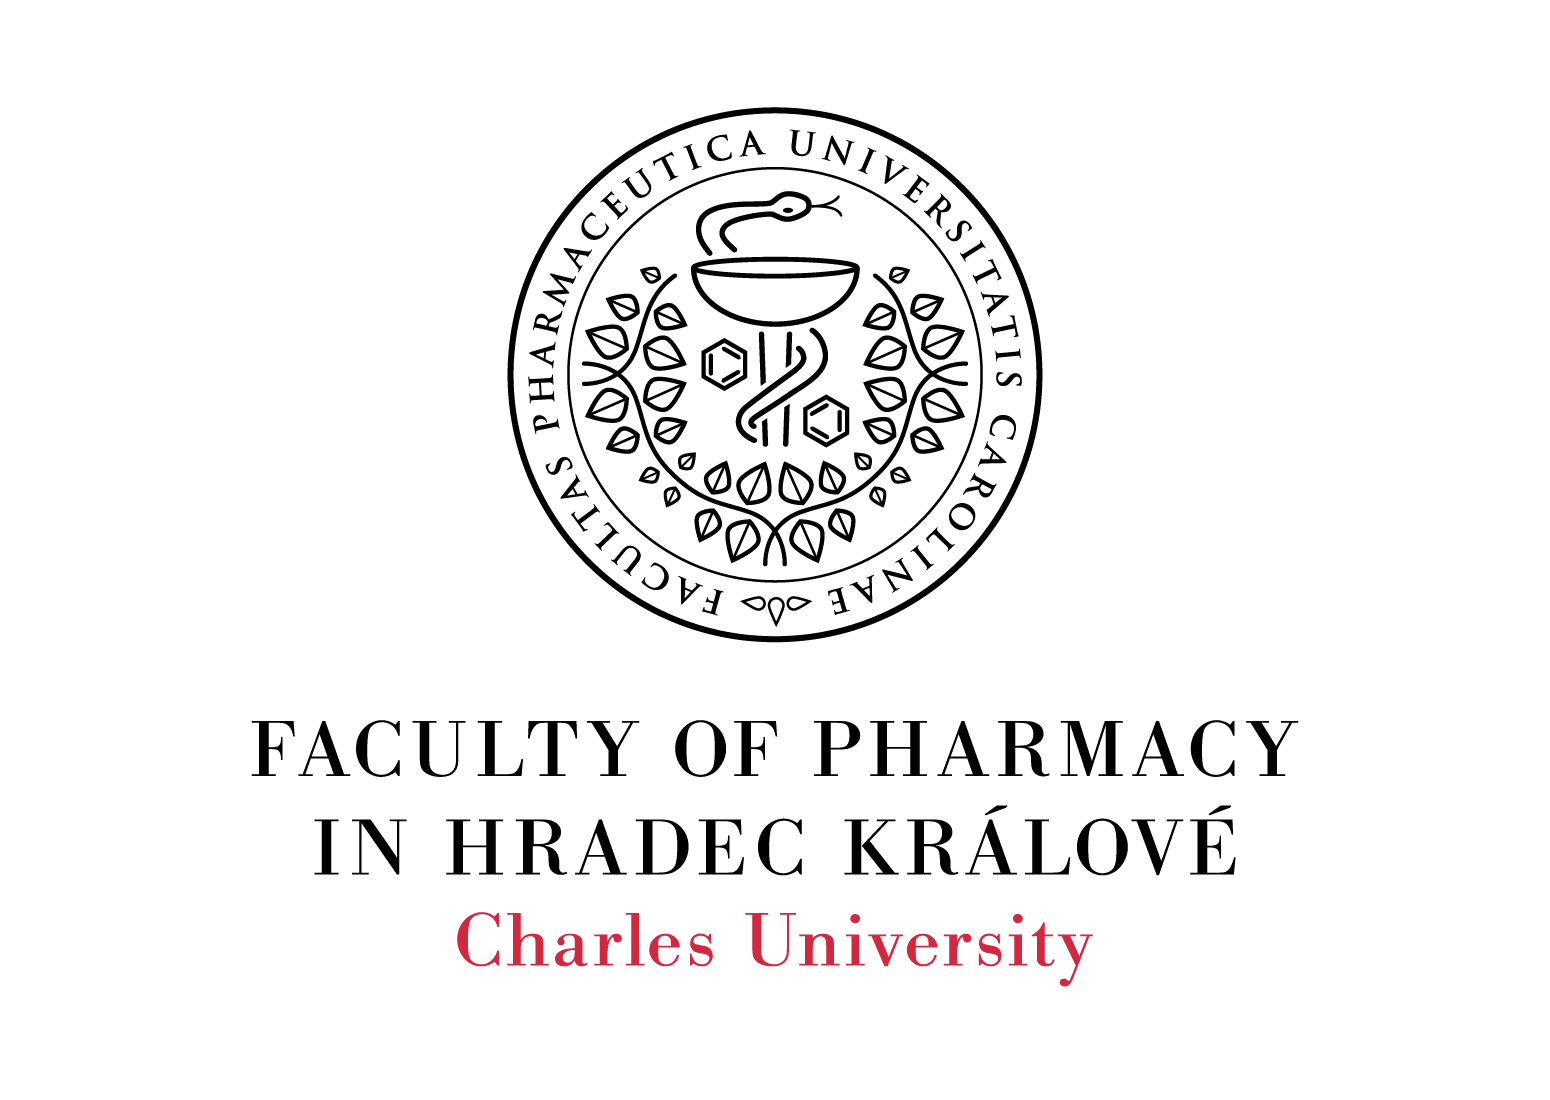 Logotype of the Faculty of Pharmacy, Charles University